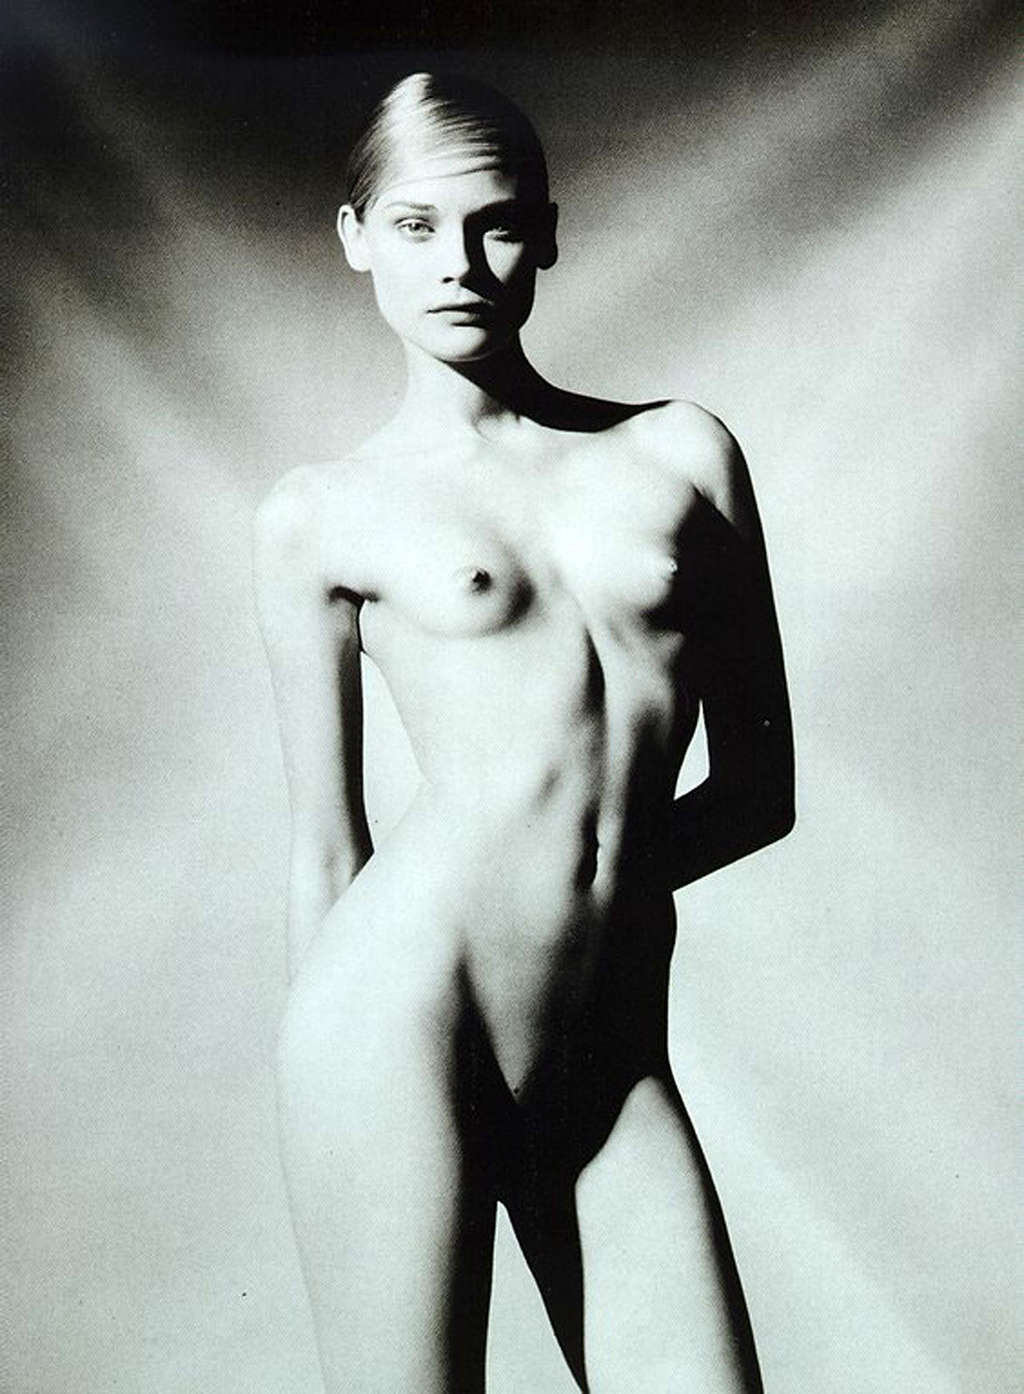 Diane kruger naked photos